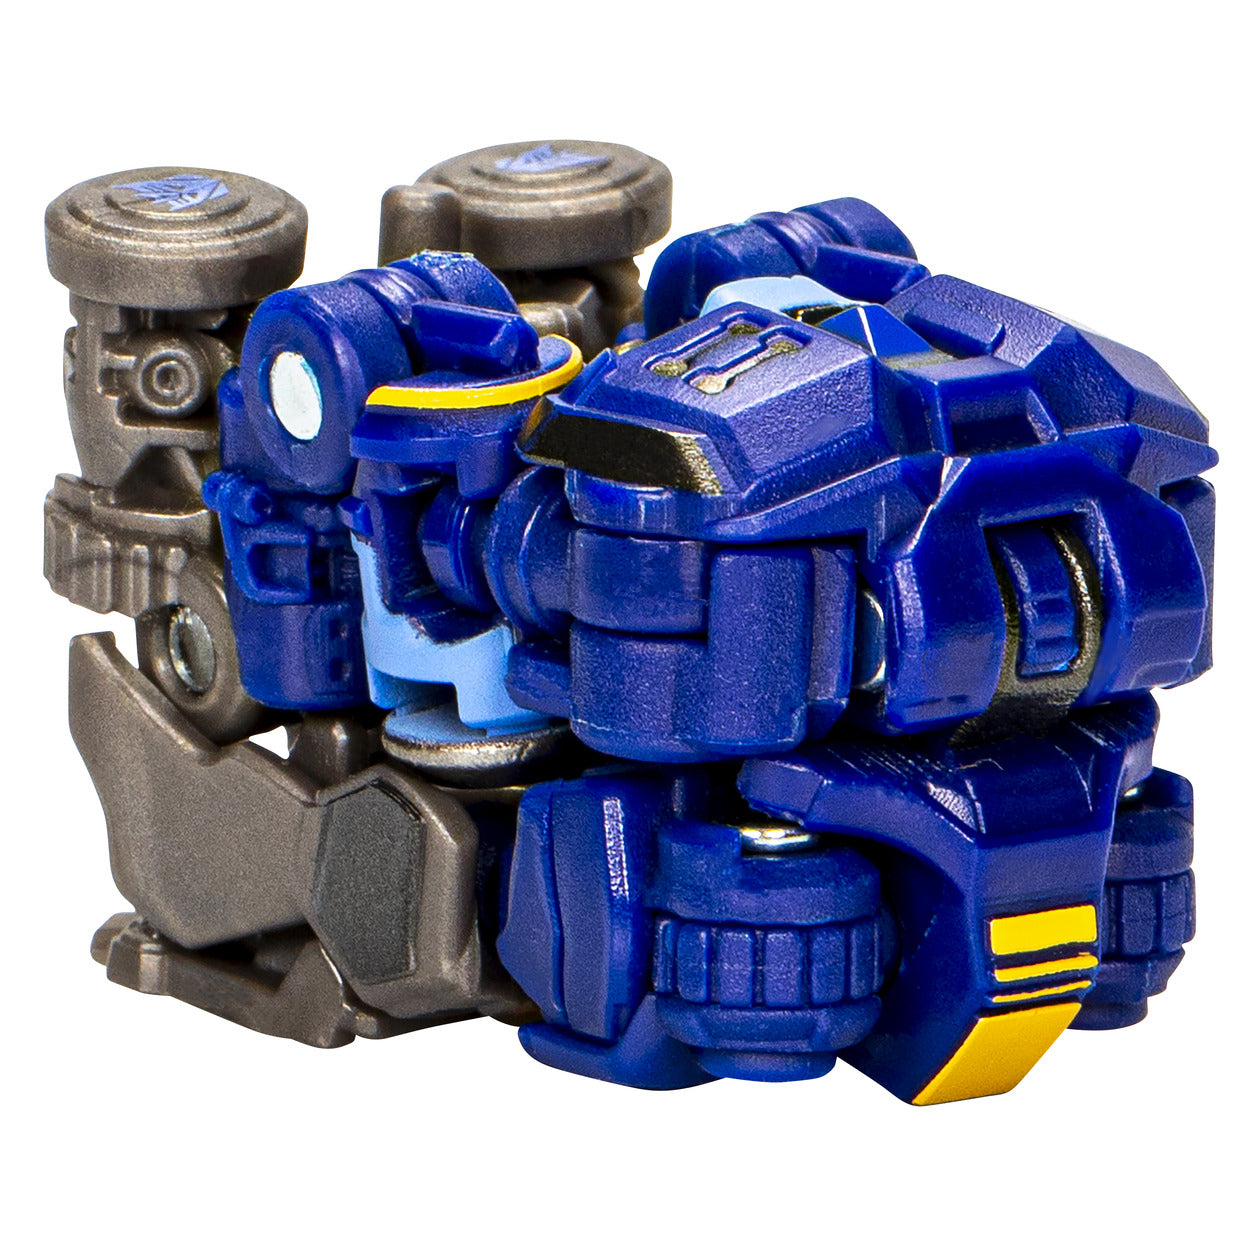 Transformers Studio Series Core Transformers: Bumblebee Concept Art Decepticon Rumble Action Figure Toy